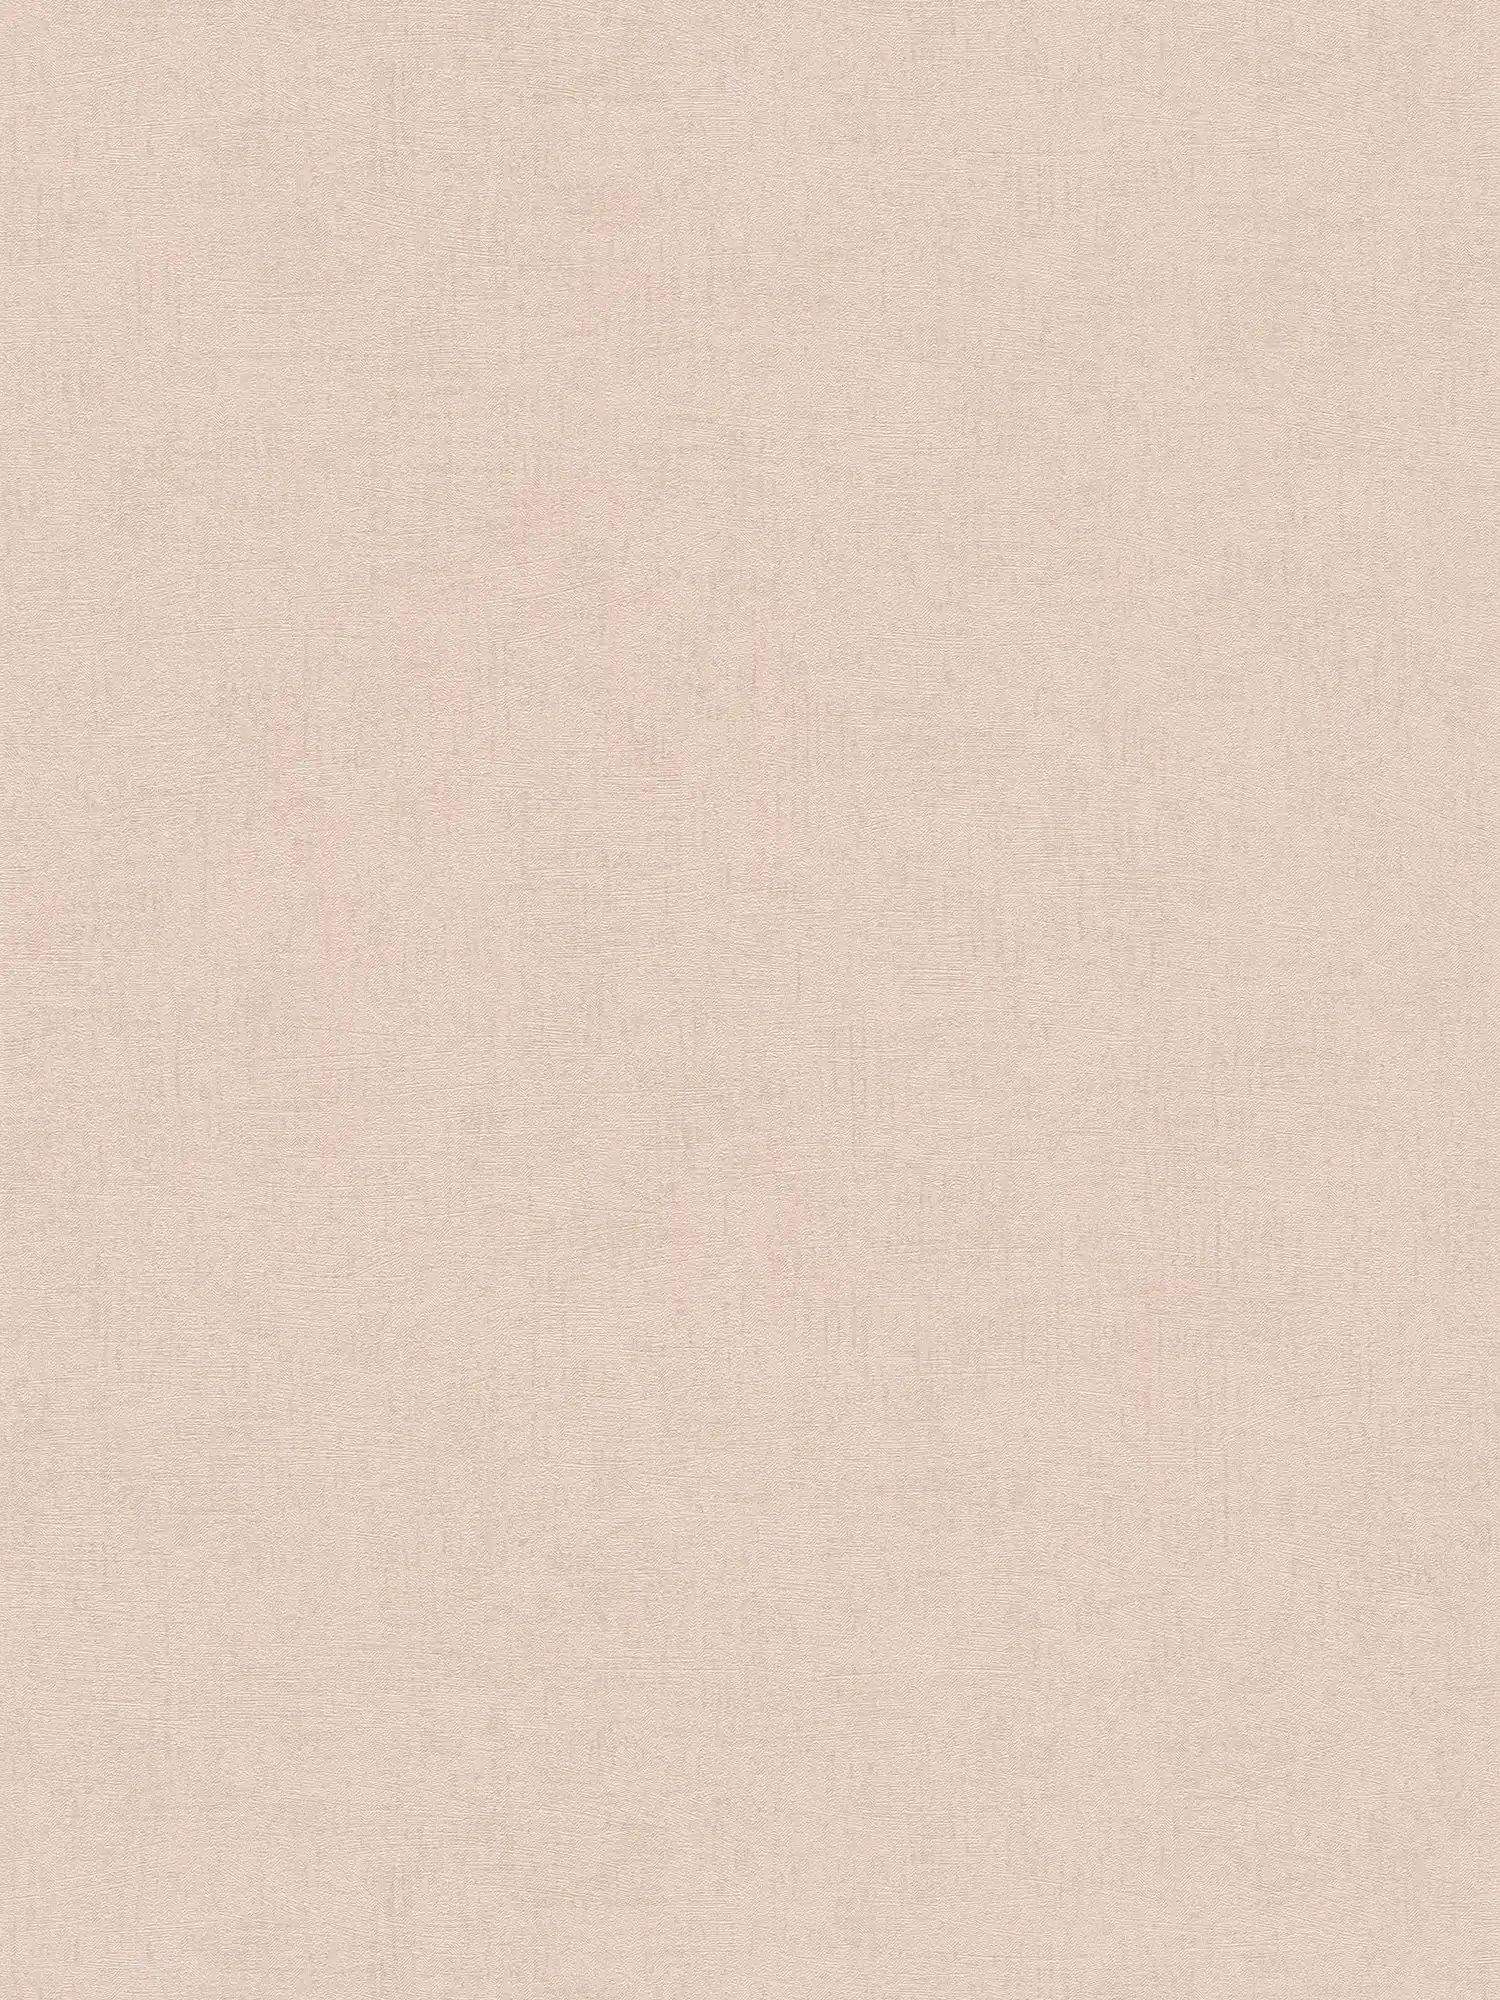 Wallpaper plain with structure embossing & gloss effect - beige, cream, metallic
